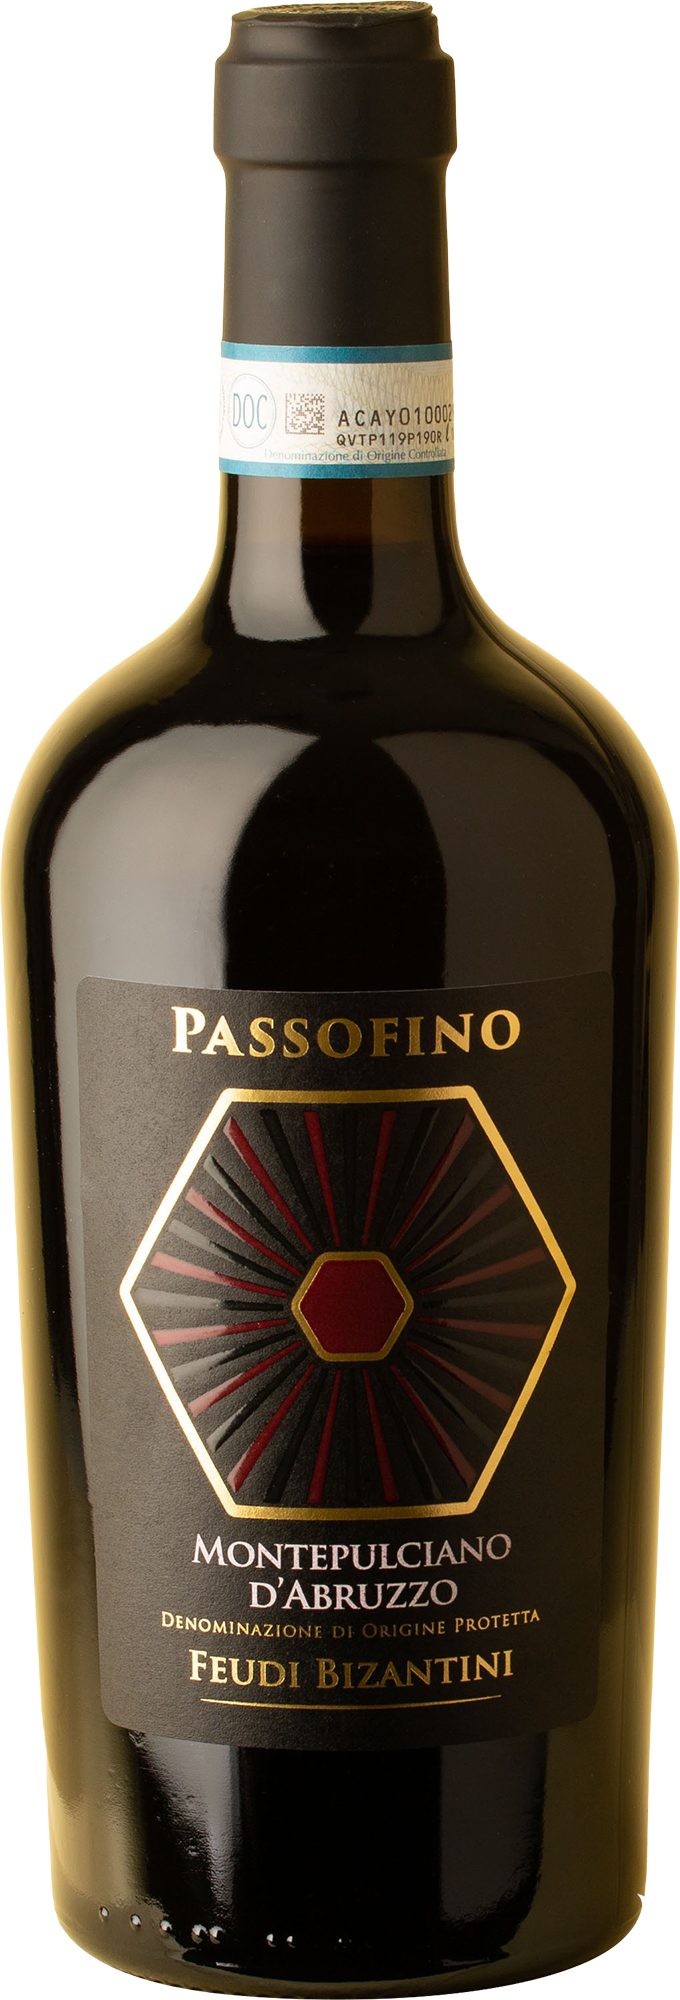 Feudi Bizantini - Passofino Montepulciano 2019 Red Wine